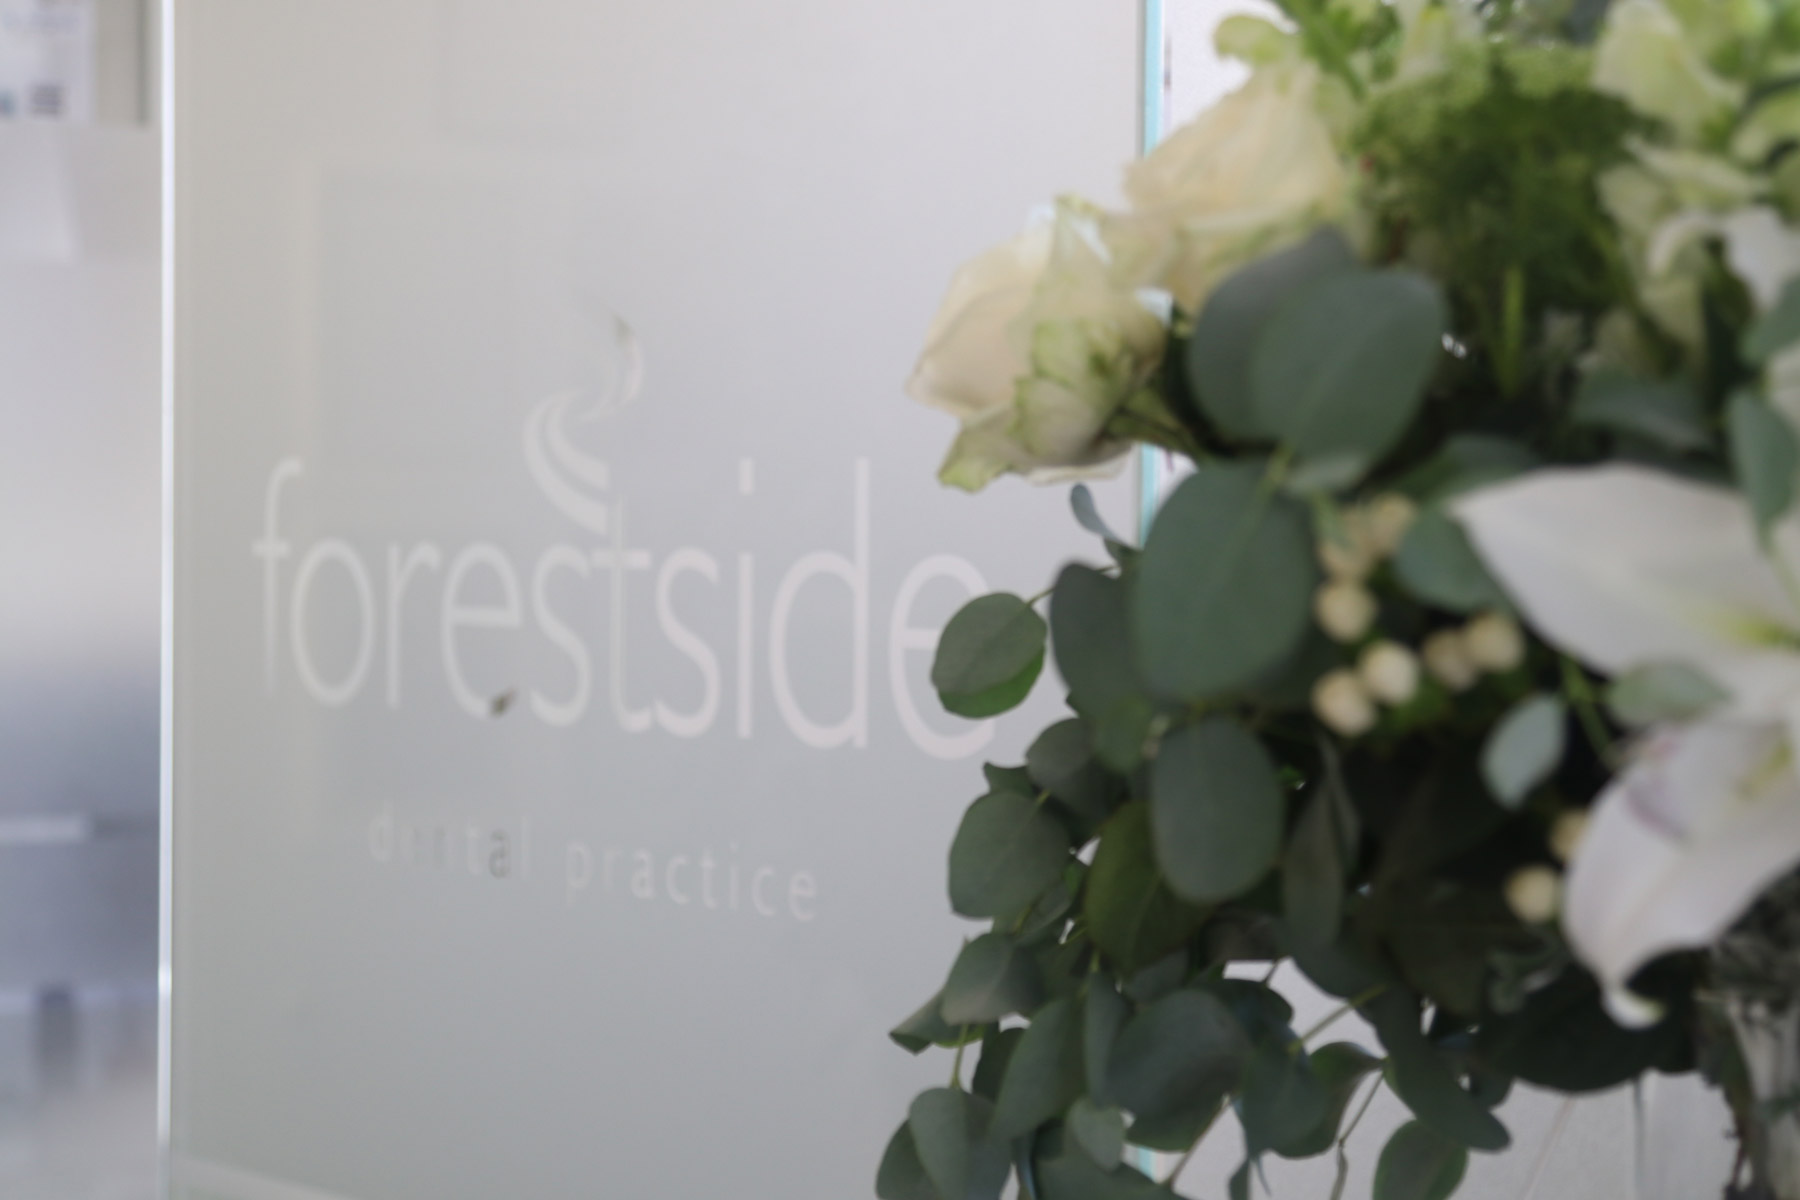 forestside dental practice accreditations